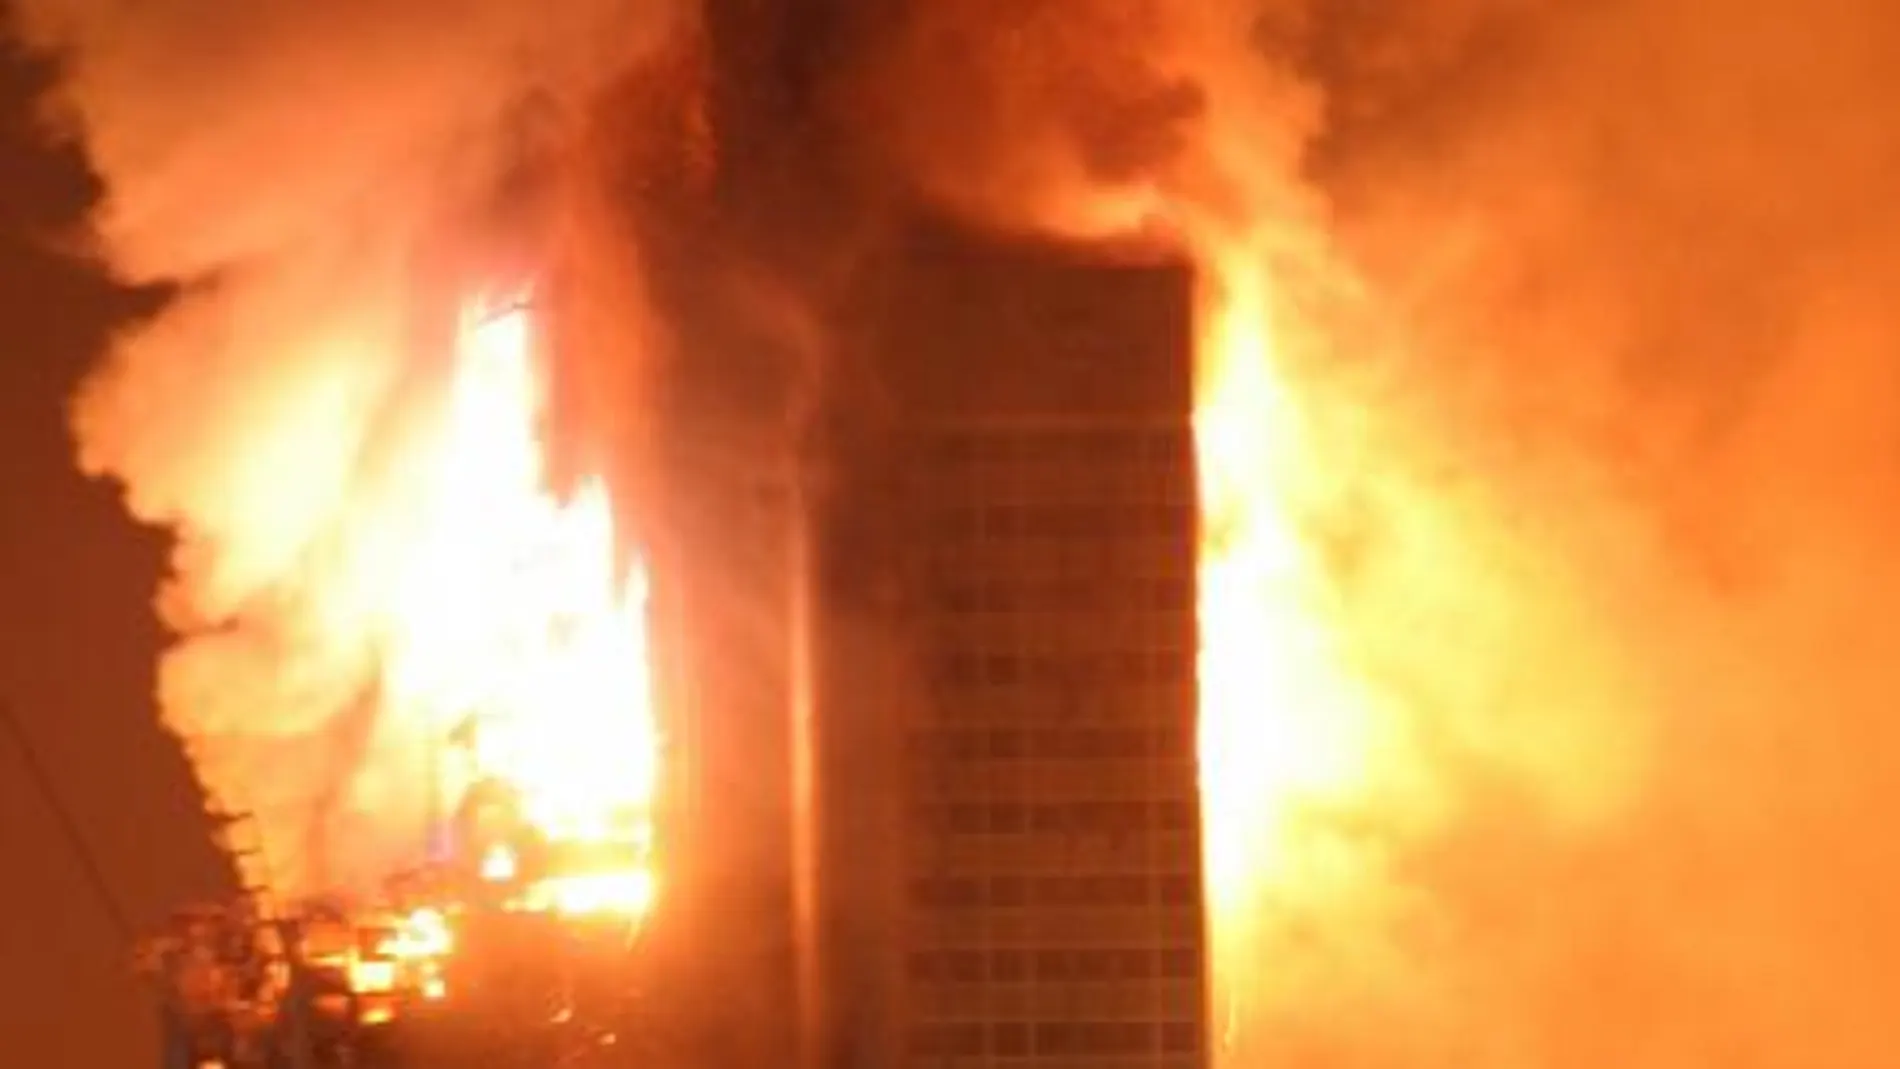 Imagen del incendio de la torre Windsor